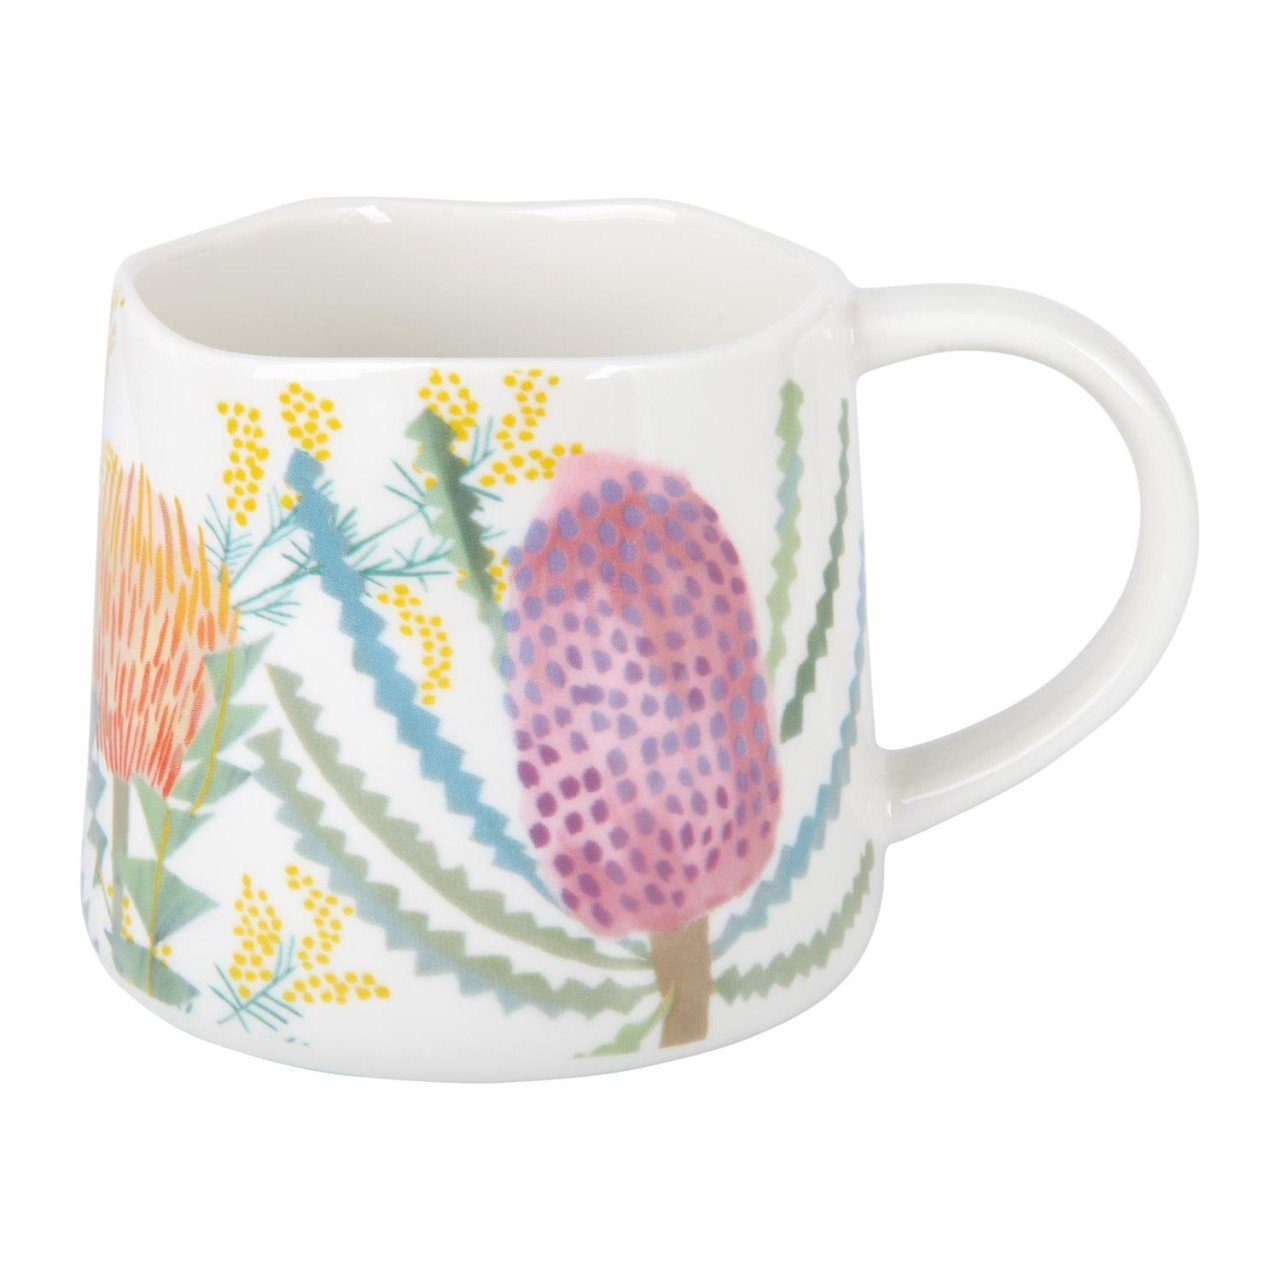 H:8cm L:12cm D:8cm Maxwell & Becher Mehrfarbig Blooms, Williams Porzellan Porzellan, Native